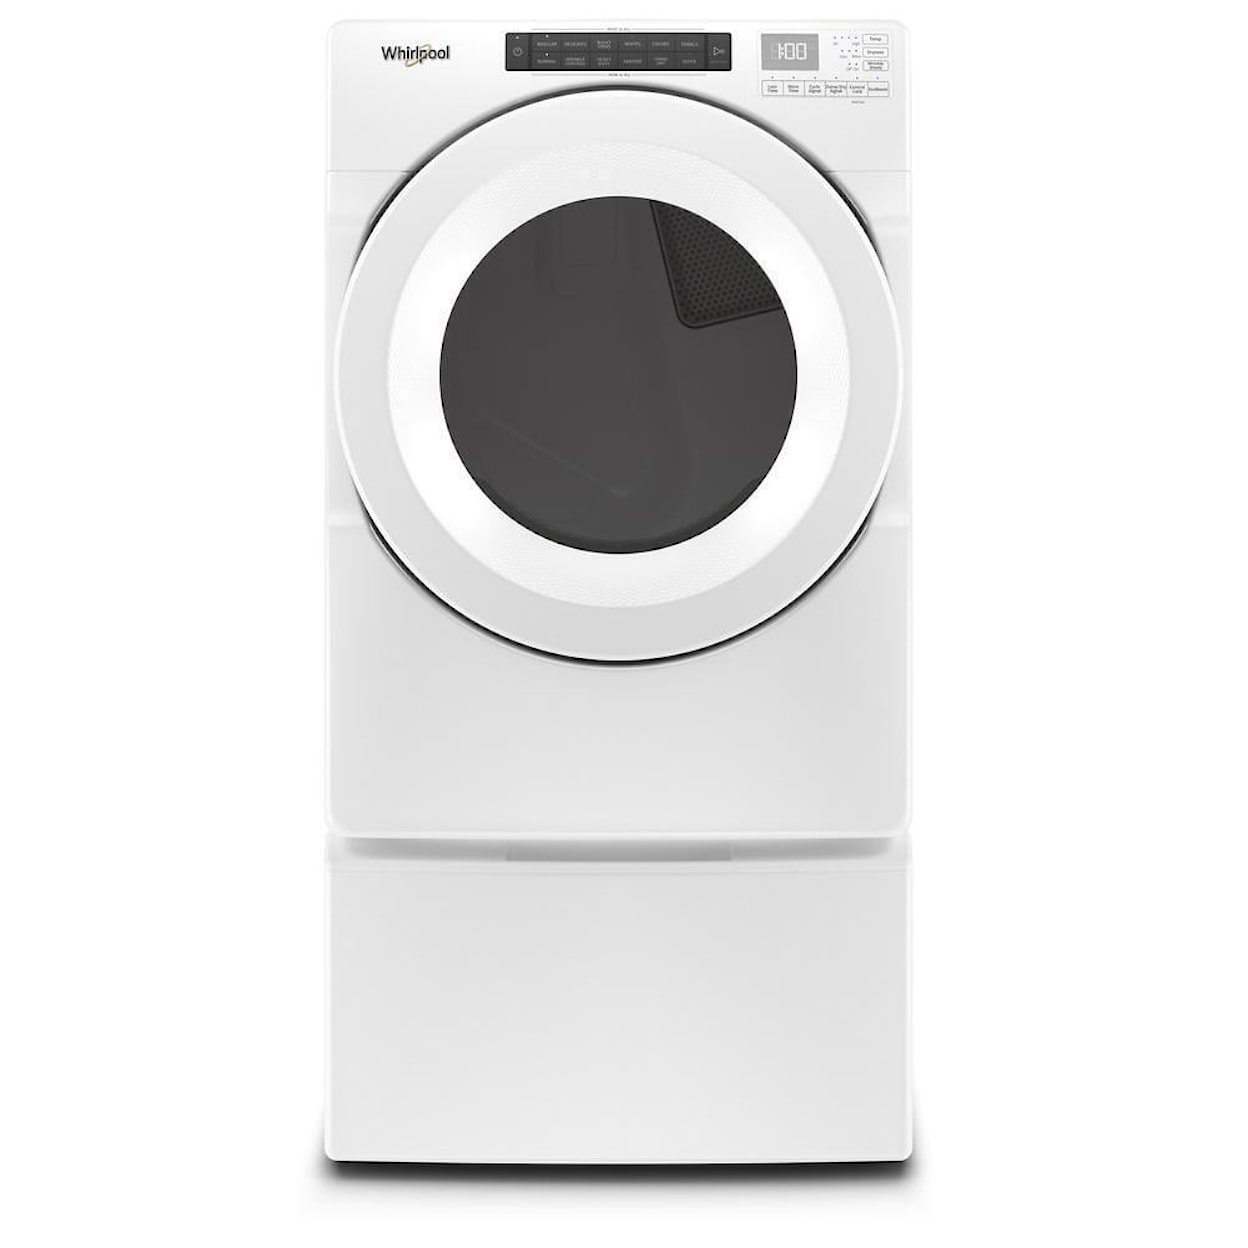 Whirlpool Laundry Dryer